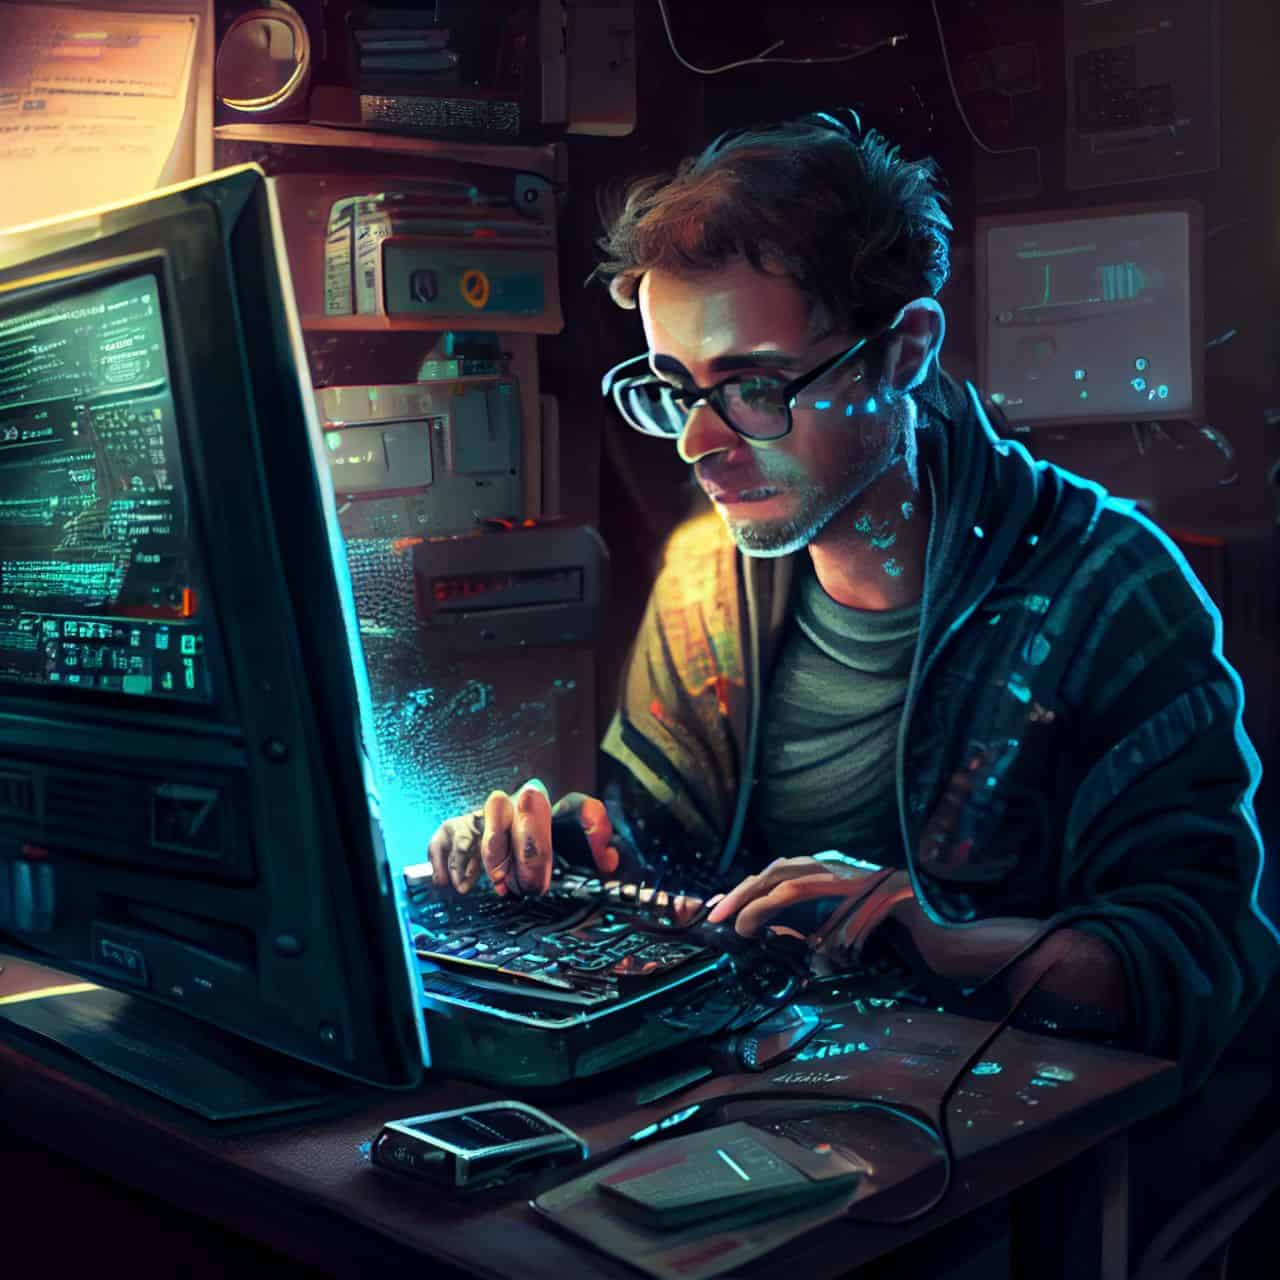 nerd programming on a computer